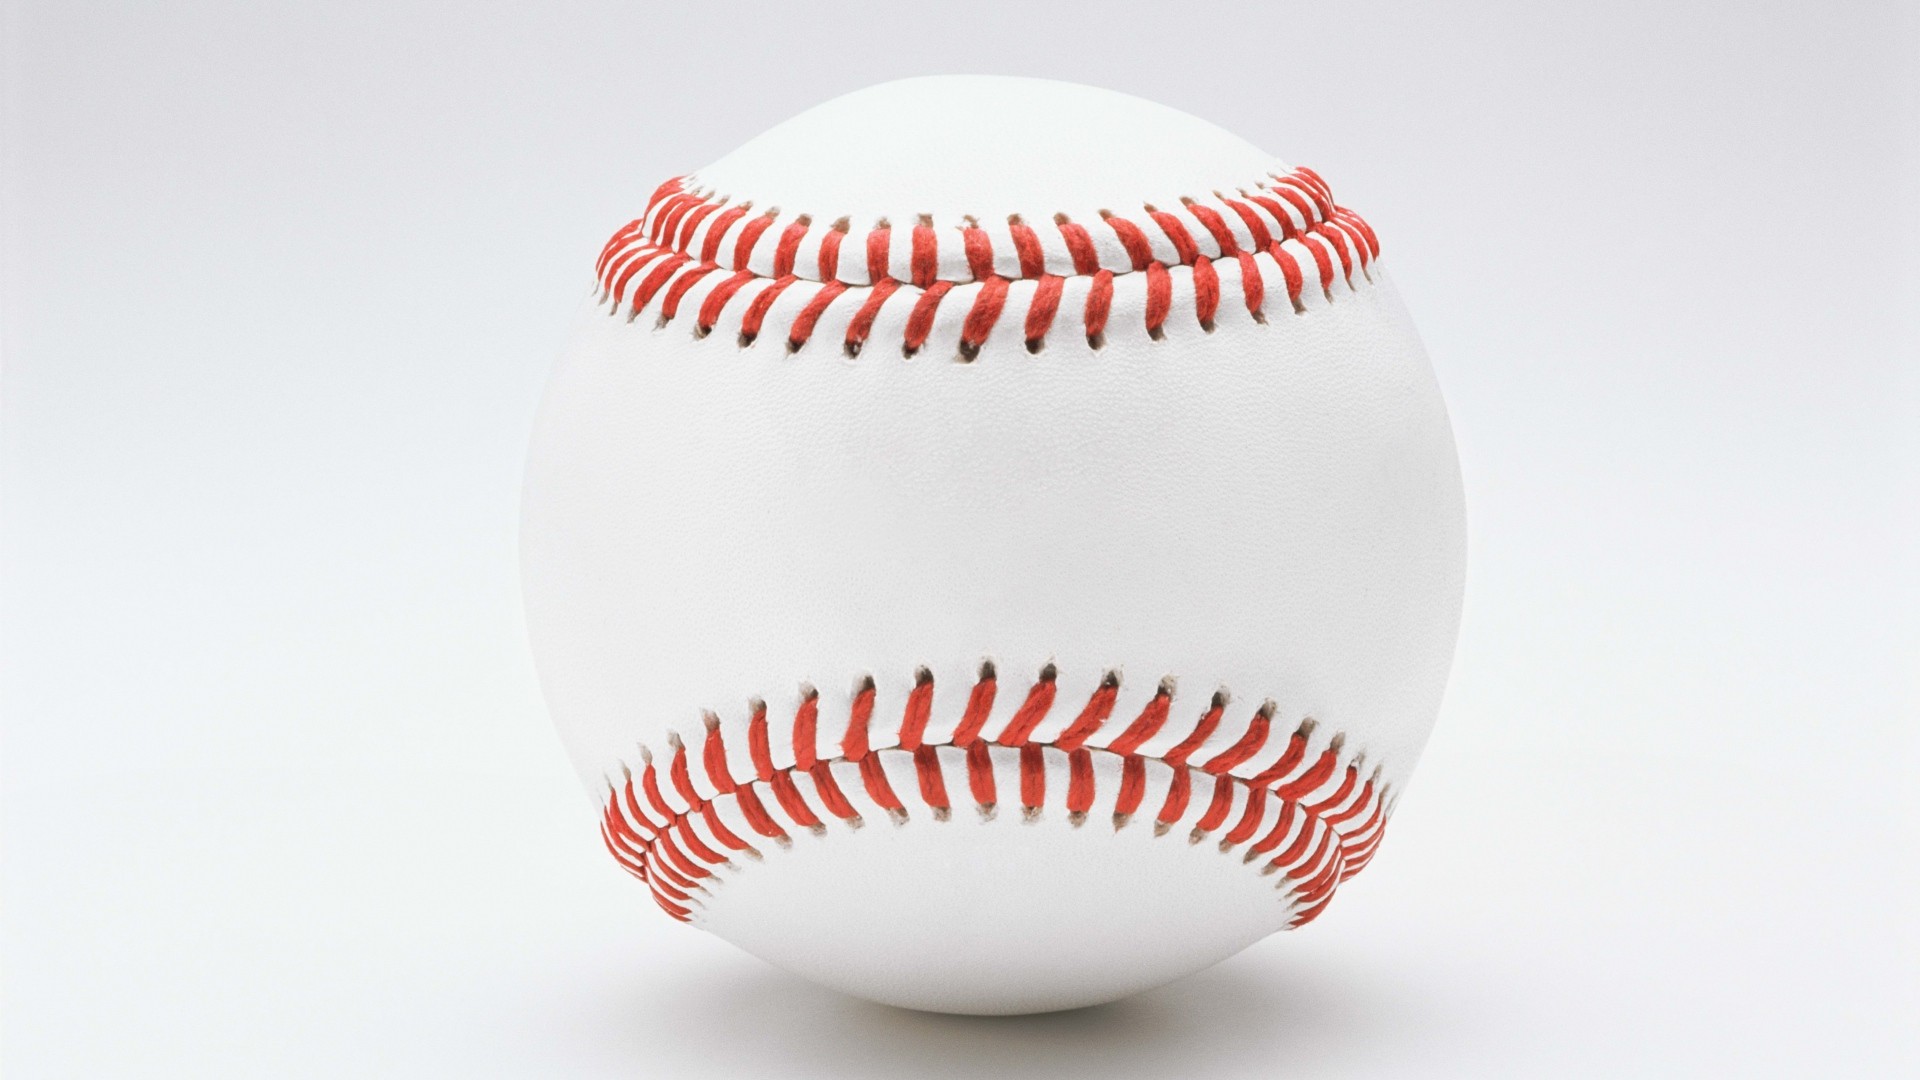 Baseball Game Balls hd wallpaper - Freshwidewallpapers.com ...